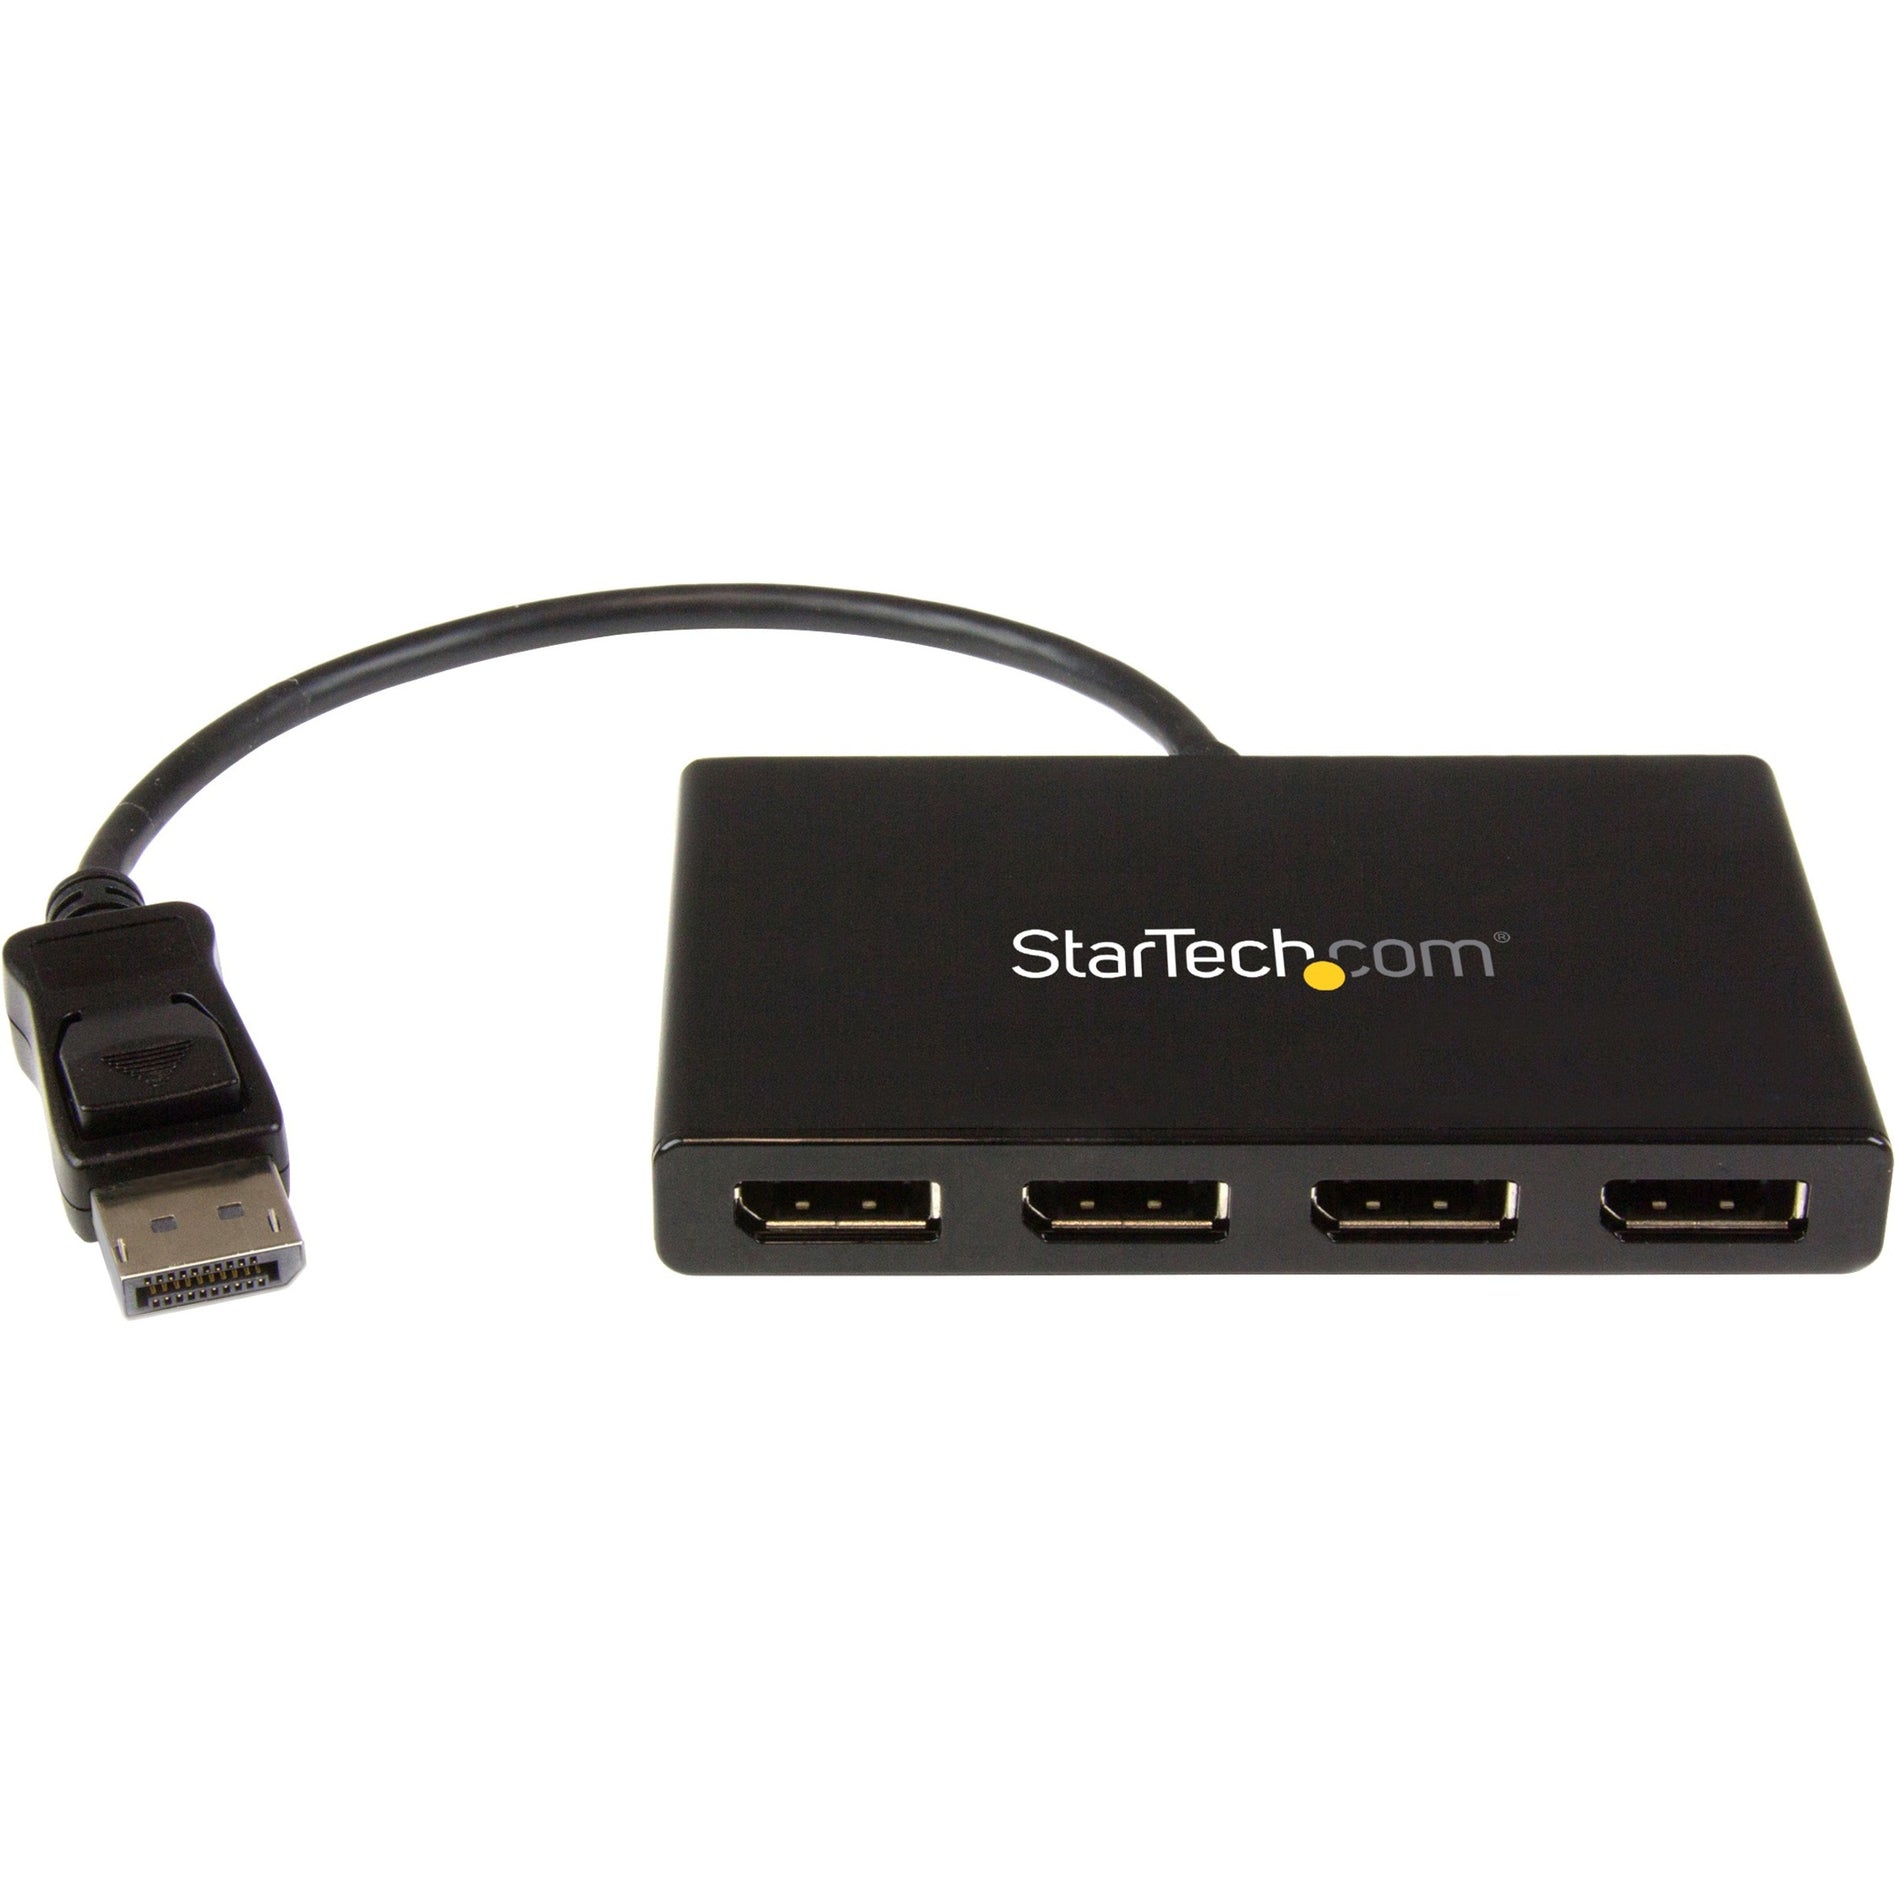 StarTech.com MSTDP124DP MST Hub - DisplayPort to 4x DisplayPort Multi Stream Transport Hub - DP 1.2 to DP 4K Video Resolution  スターテック・ドットコム MSTDP124DP MST ハブ - ディスプレイポートから4xディスプレイポートへ、マルチストリームトランスポートハブ - DP 1.2 to DP、4K ビデオ解像度